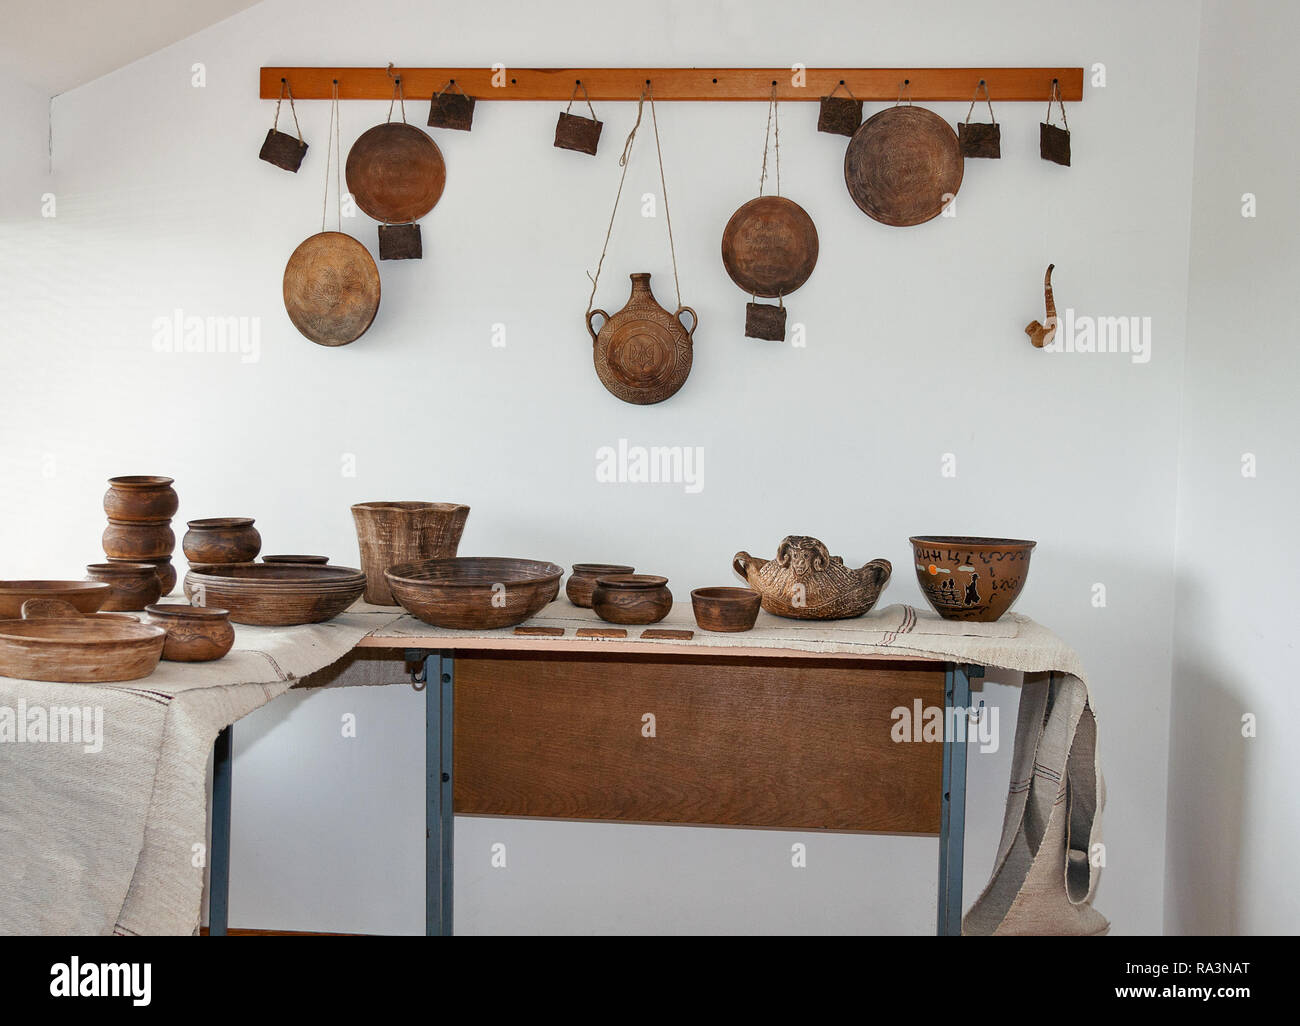 https://c8.alamy.com/comp/RA3NAT/ancient-ukrainian-traditional-kitchen-utensils-and-houseware-RA3NAT.jpg